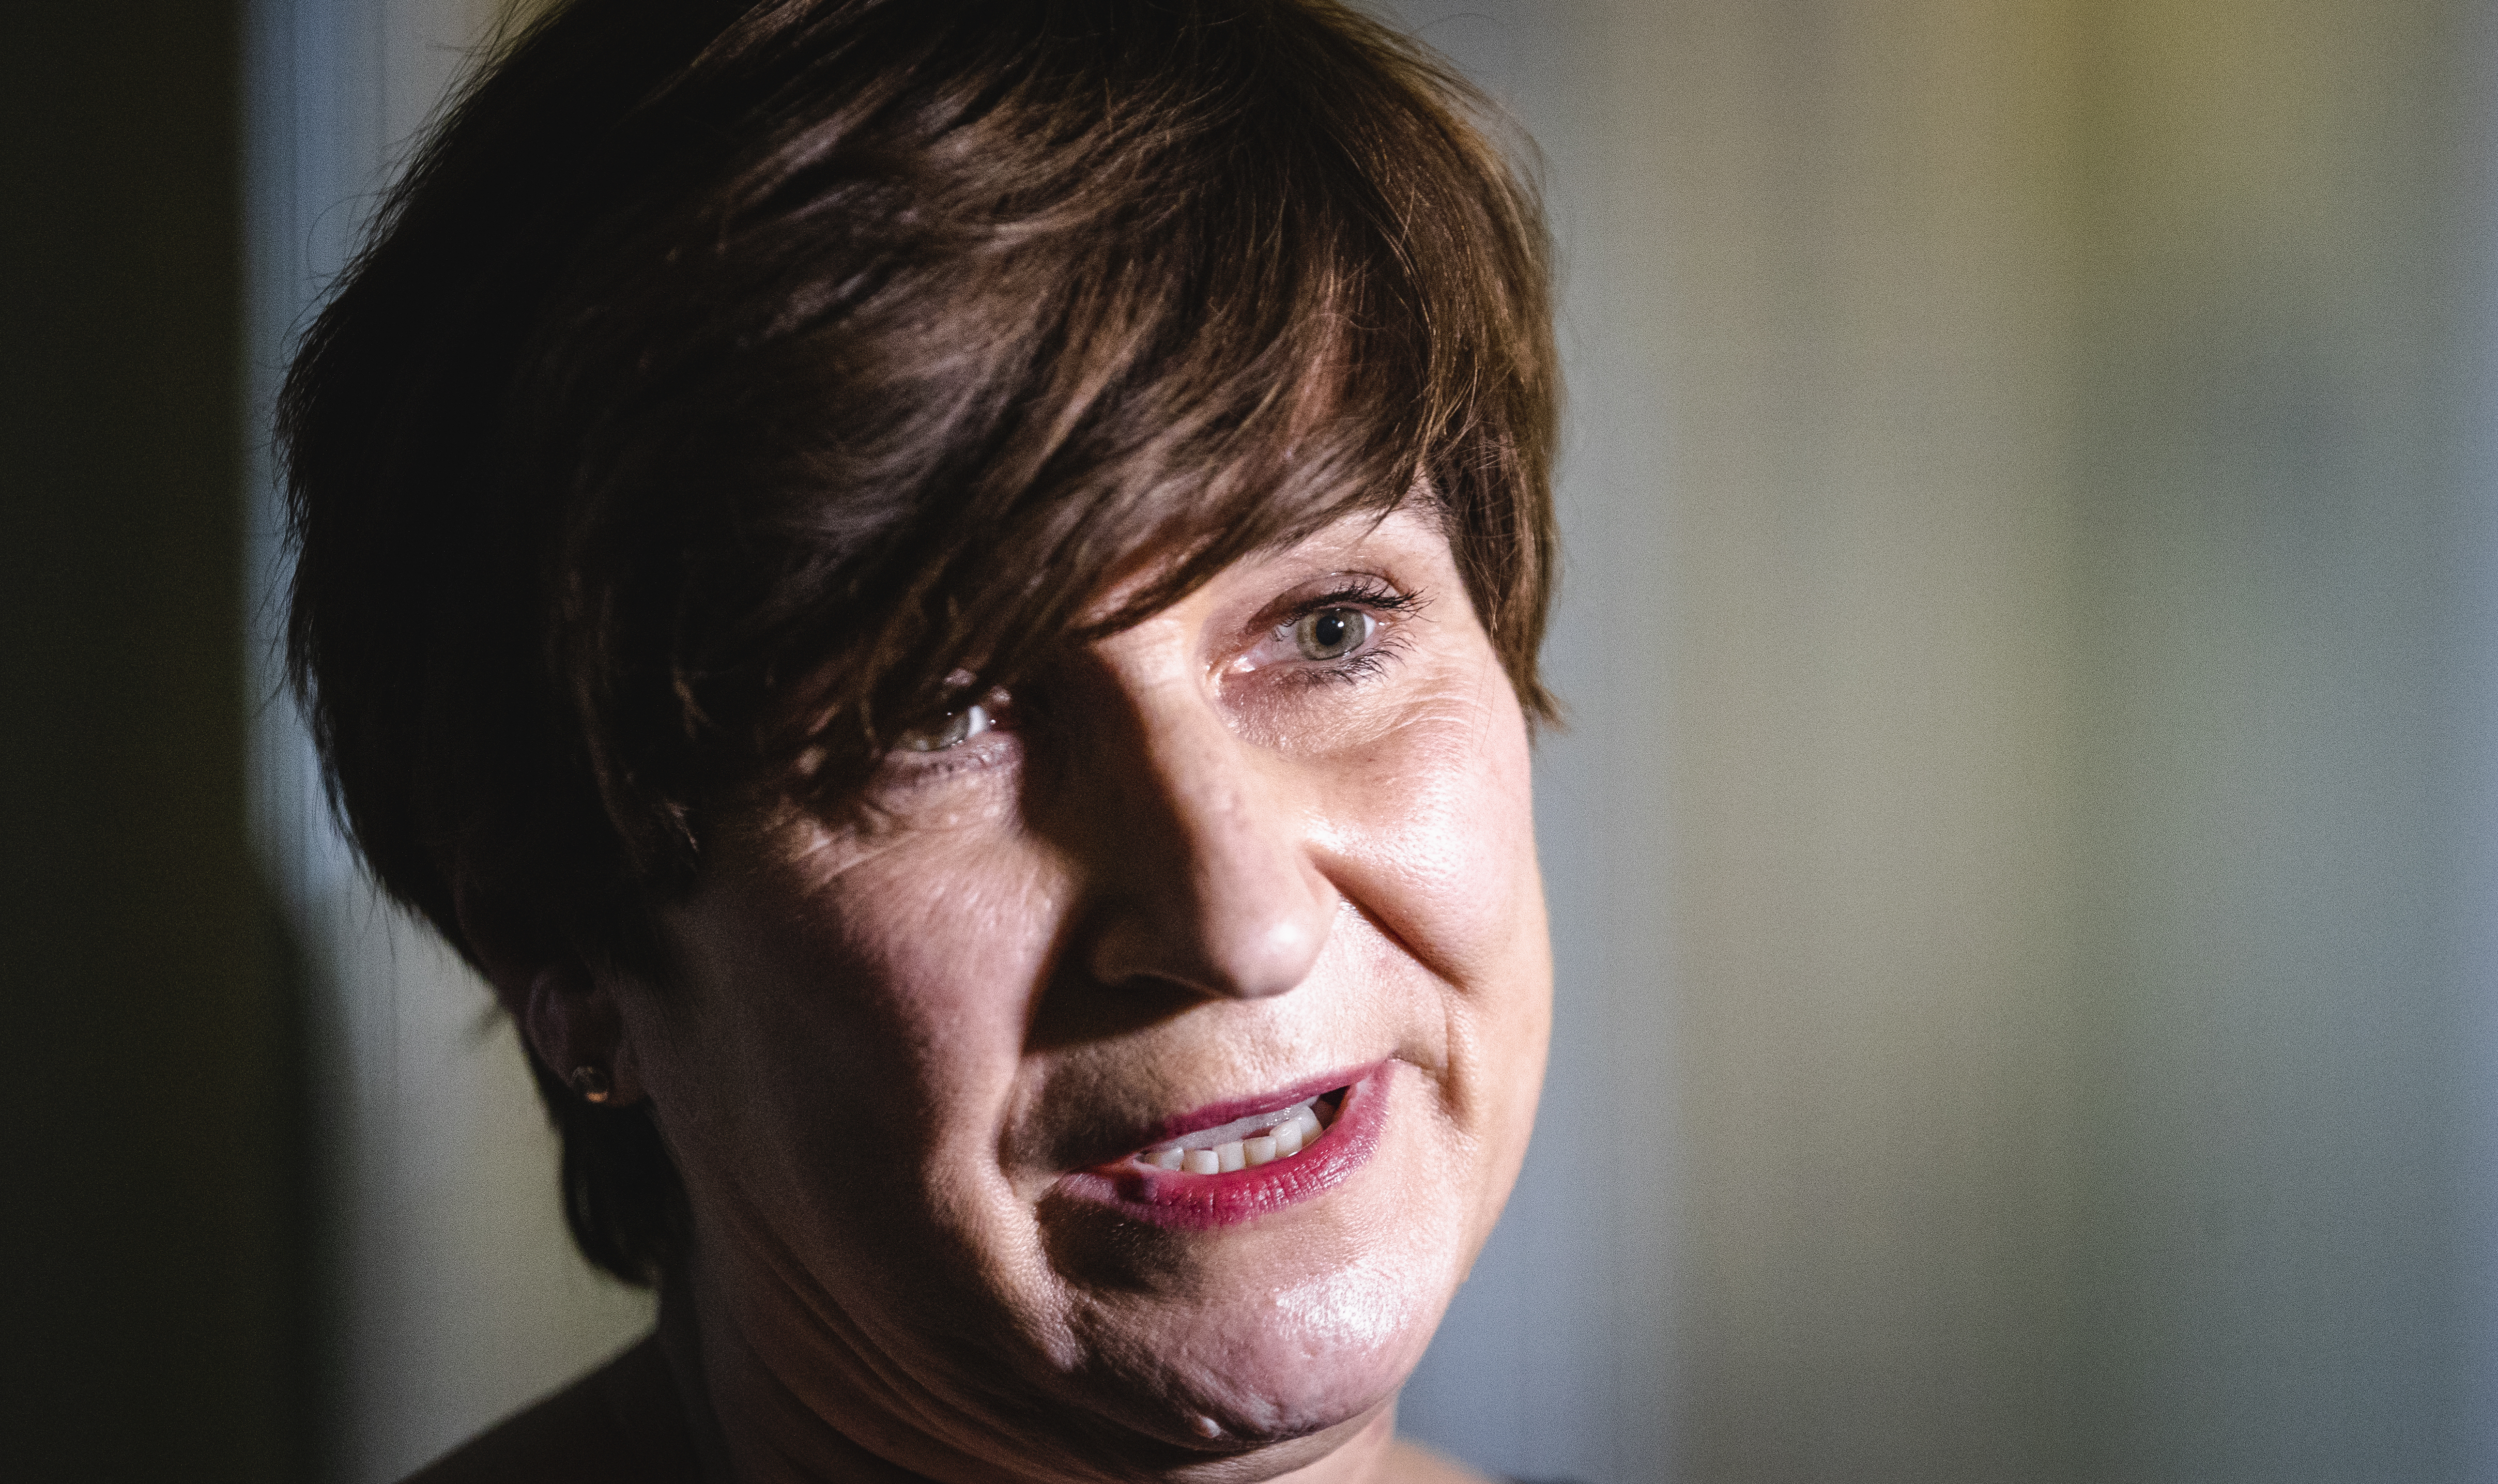 Lilianne Ploumen stop leider PvdA